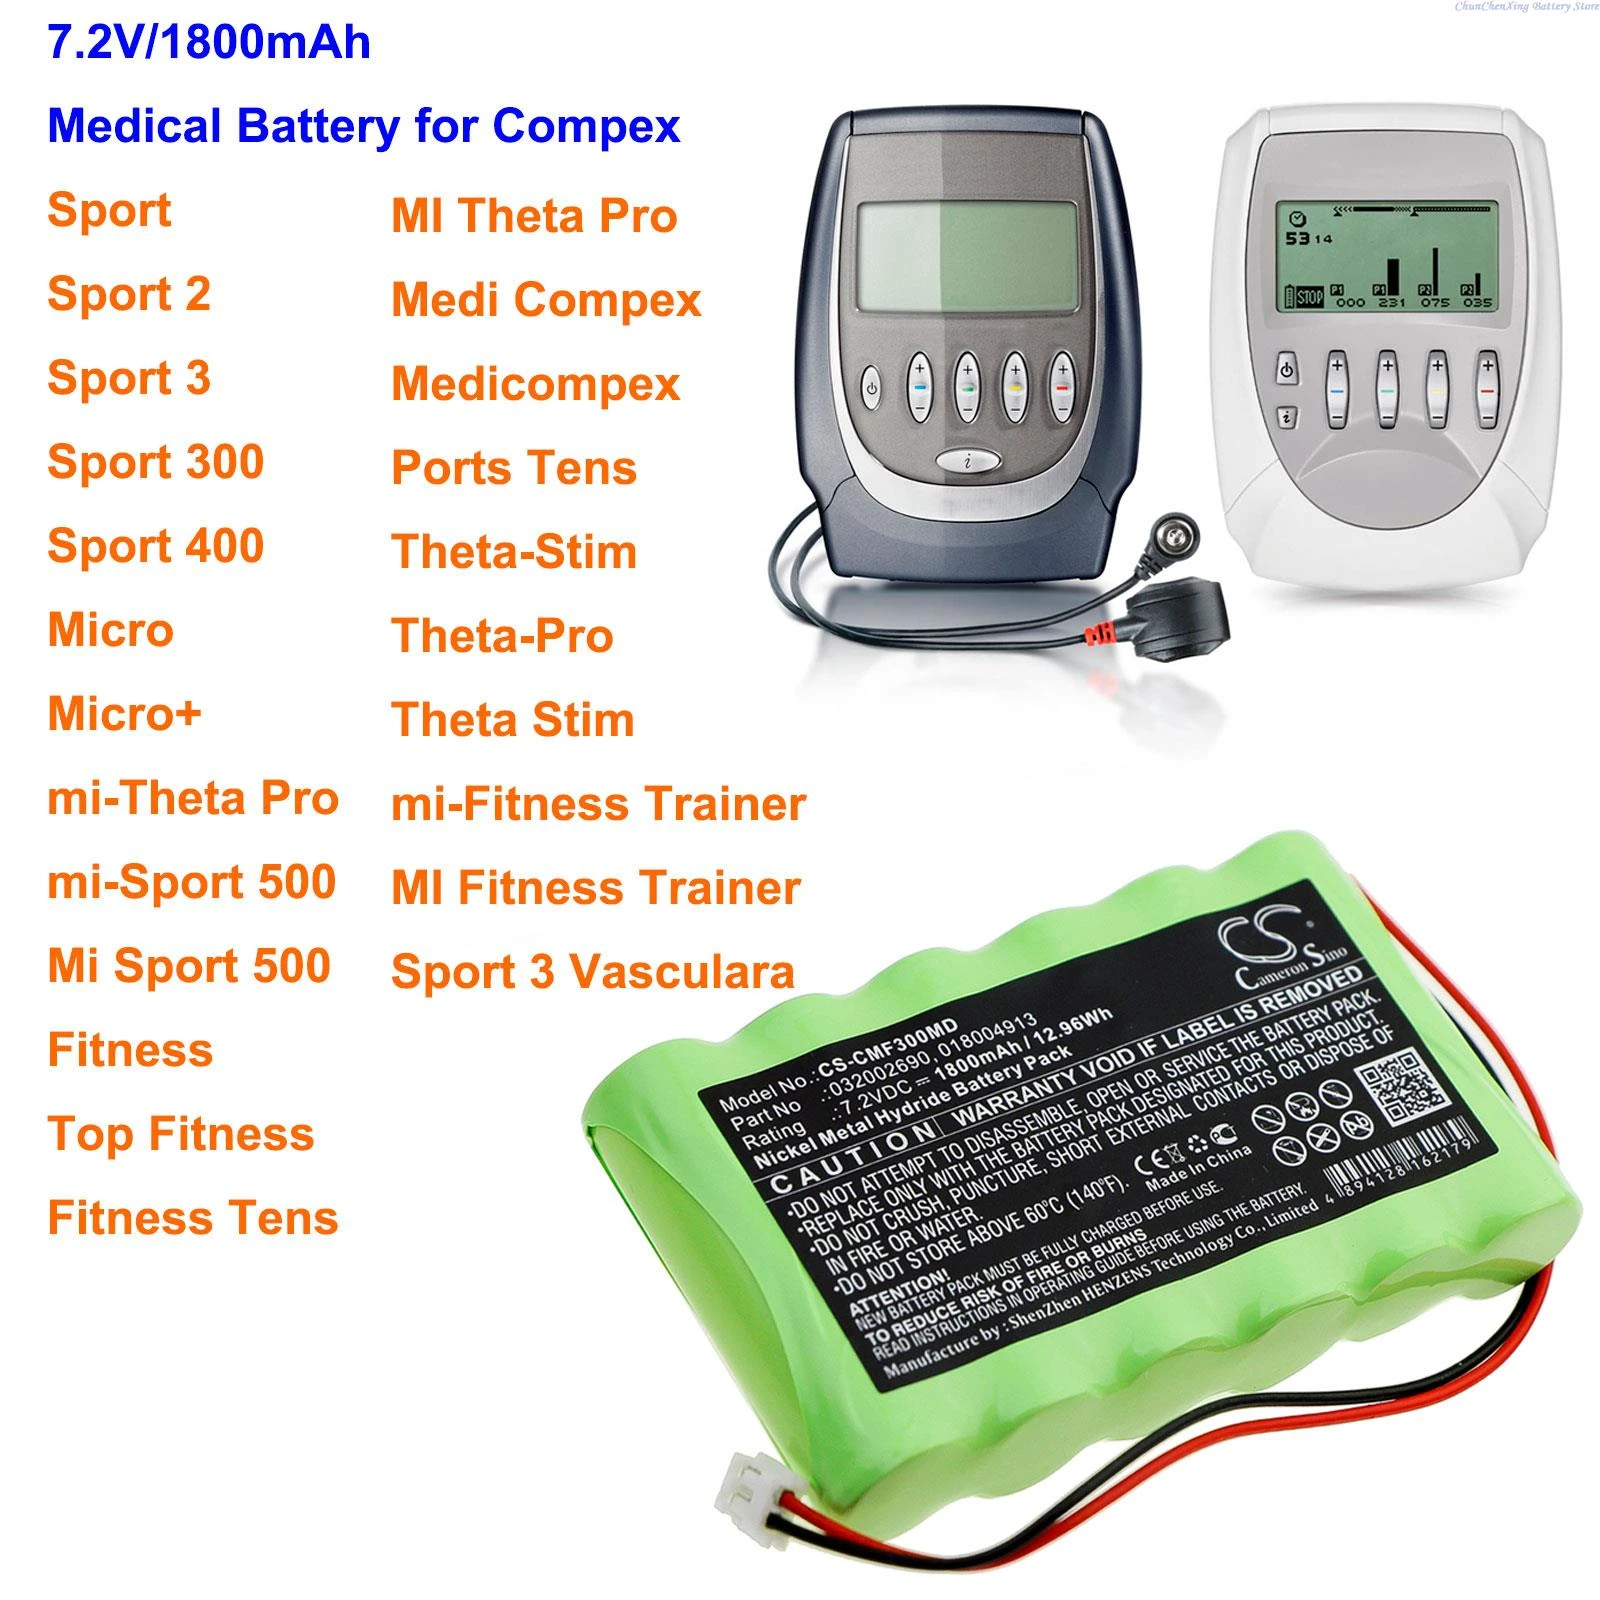 Cameron Sino 1800mAh Battery for Compex Medi Compex,Ports Tens,Sport  3,Sport 400,Fitness Tens,Top Fitness,Medicompex,Sport 2|Digital Batteries|  - AliExpress